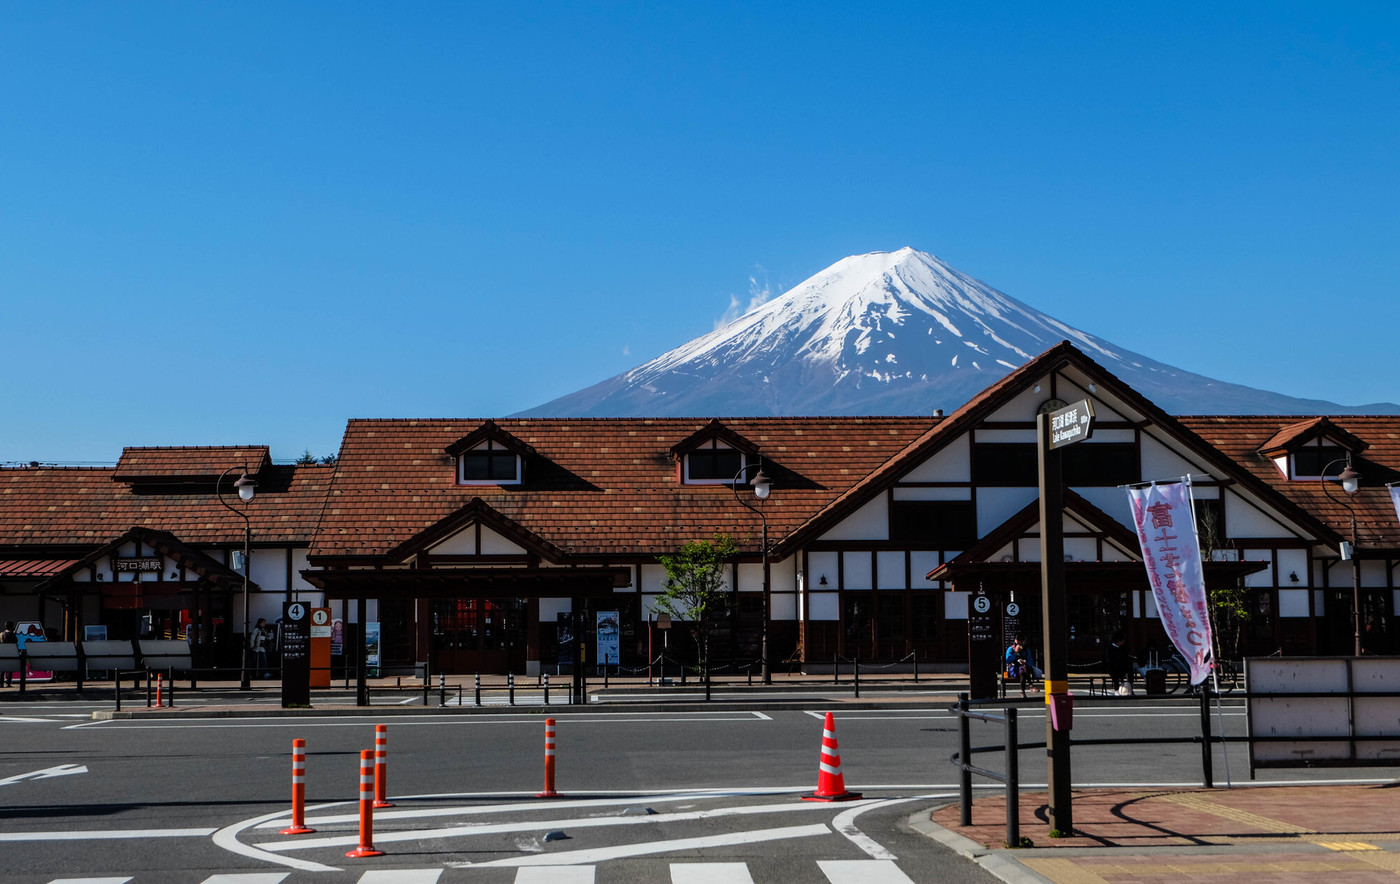 A bus station, Fuji mountain background